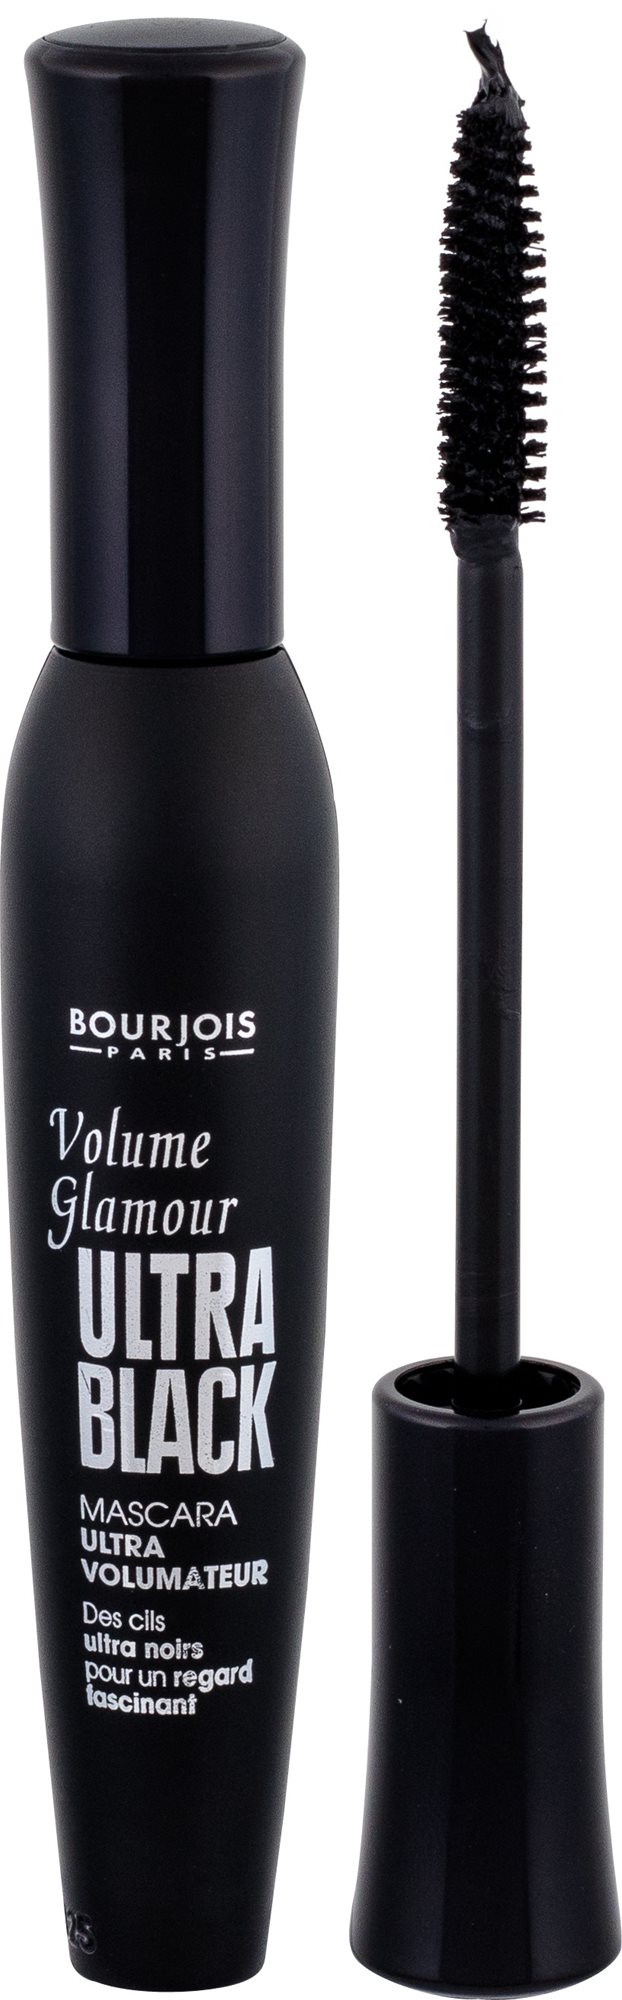 BOURJOIS Volume Glamour Ultra Black szempillaspirál